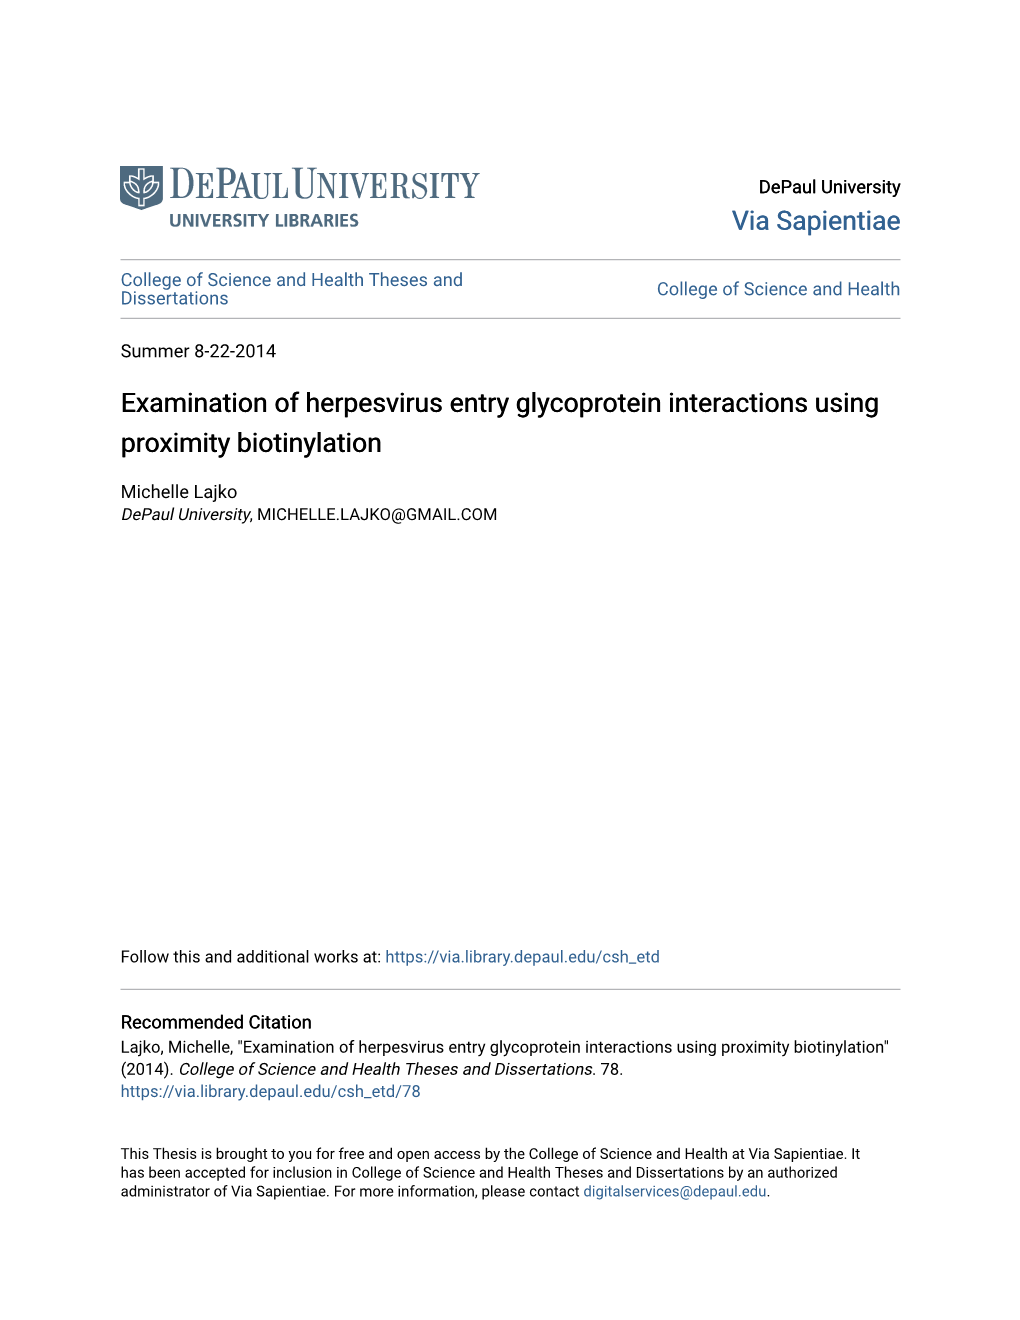 Examination of Herpesvirus Entry Glycoprotein Interactions Using Proximity Biotinylation